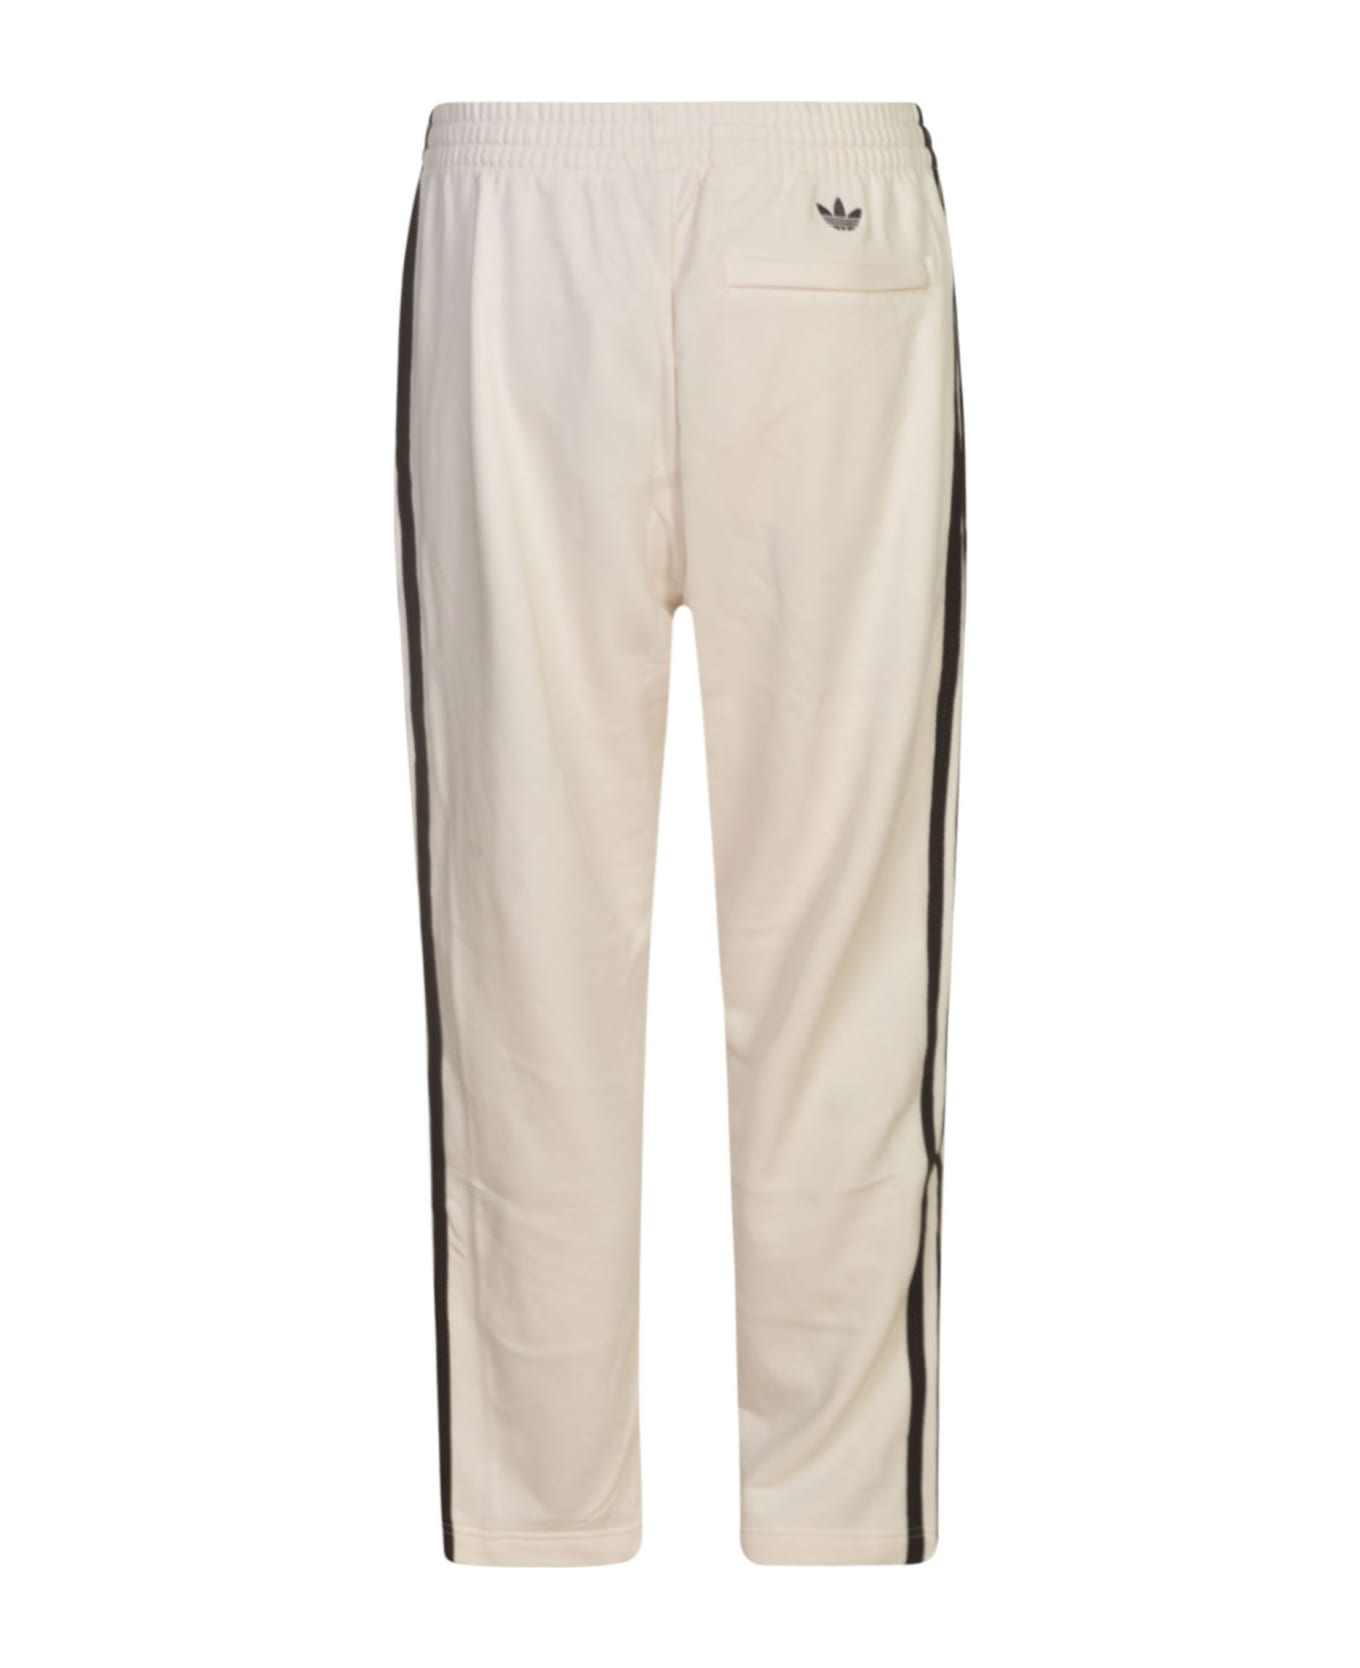 Adidas Originals by Wales Bonner Logo Detail Track Pants - White name:473